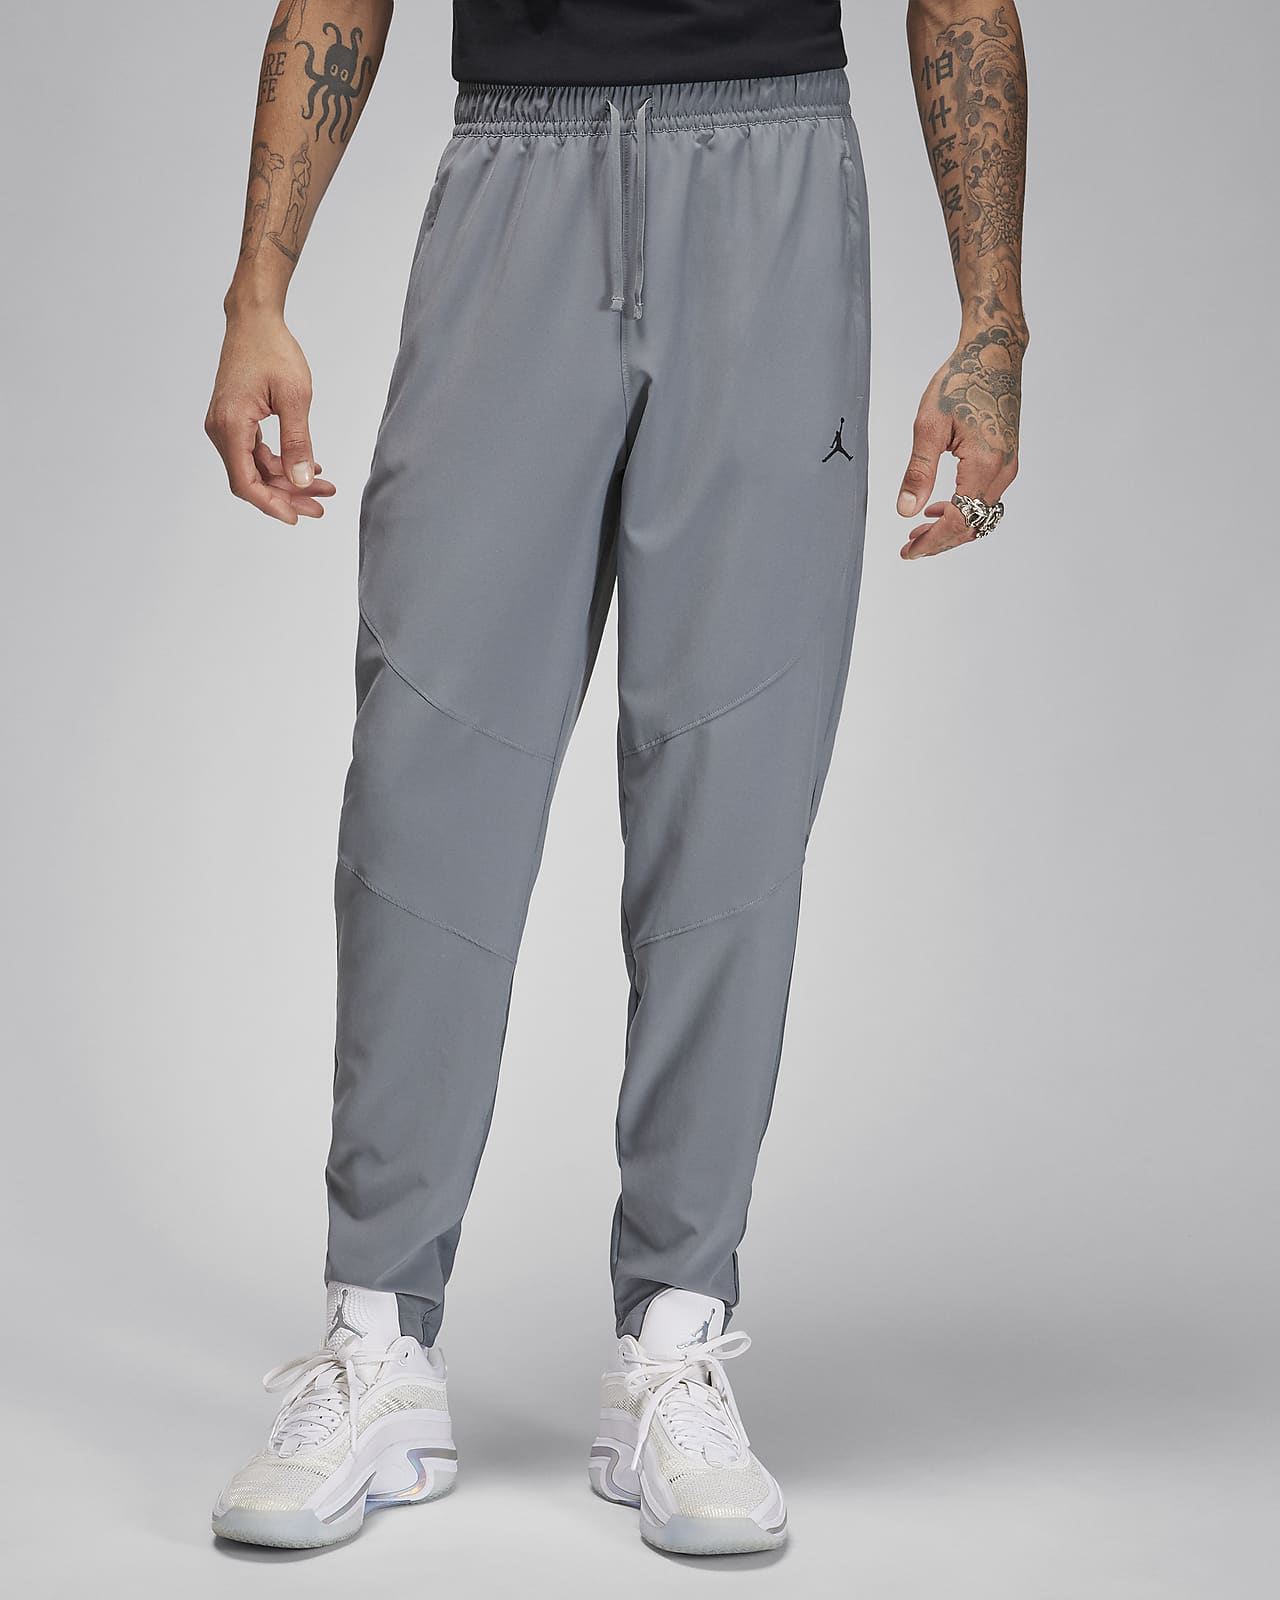 Nike Men's Cuffed Joggers Tracksuit Track Pant Jogging Trouser Bottom  Sweatpants | eBay